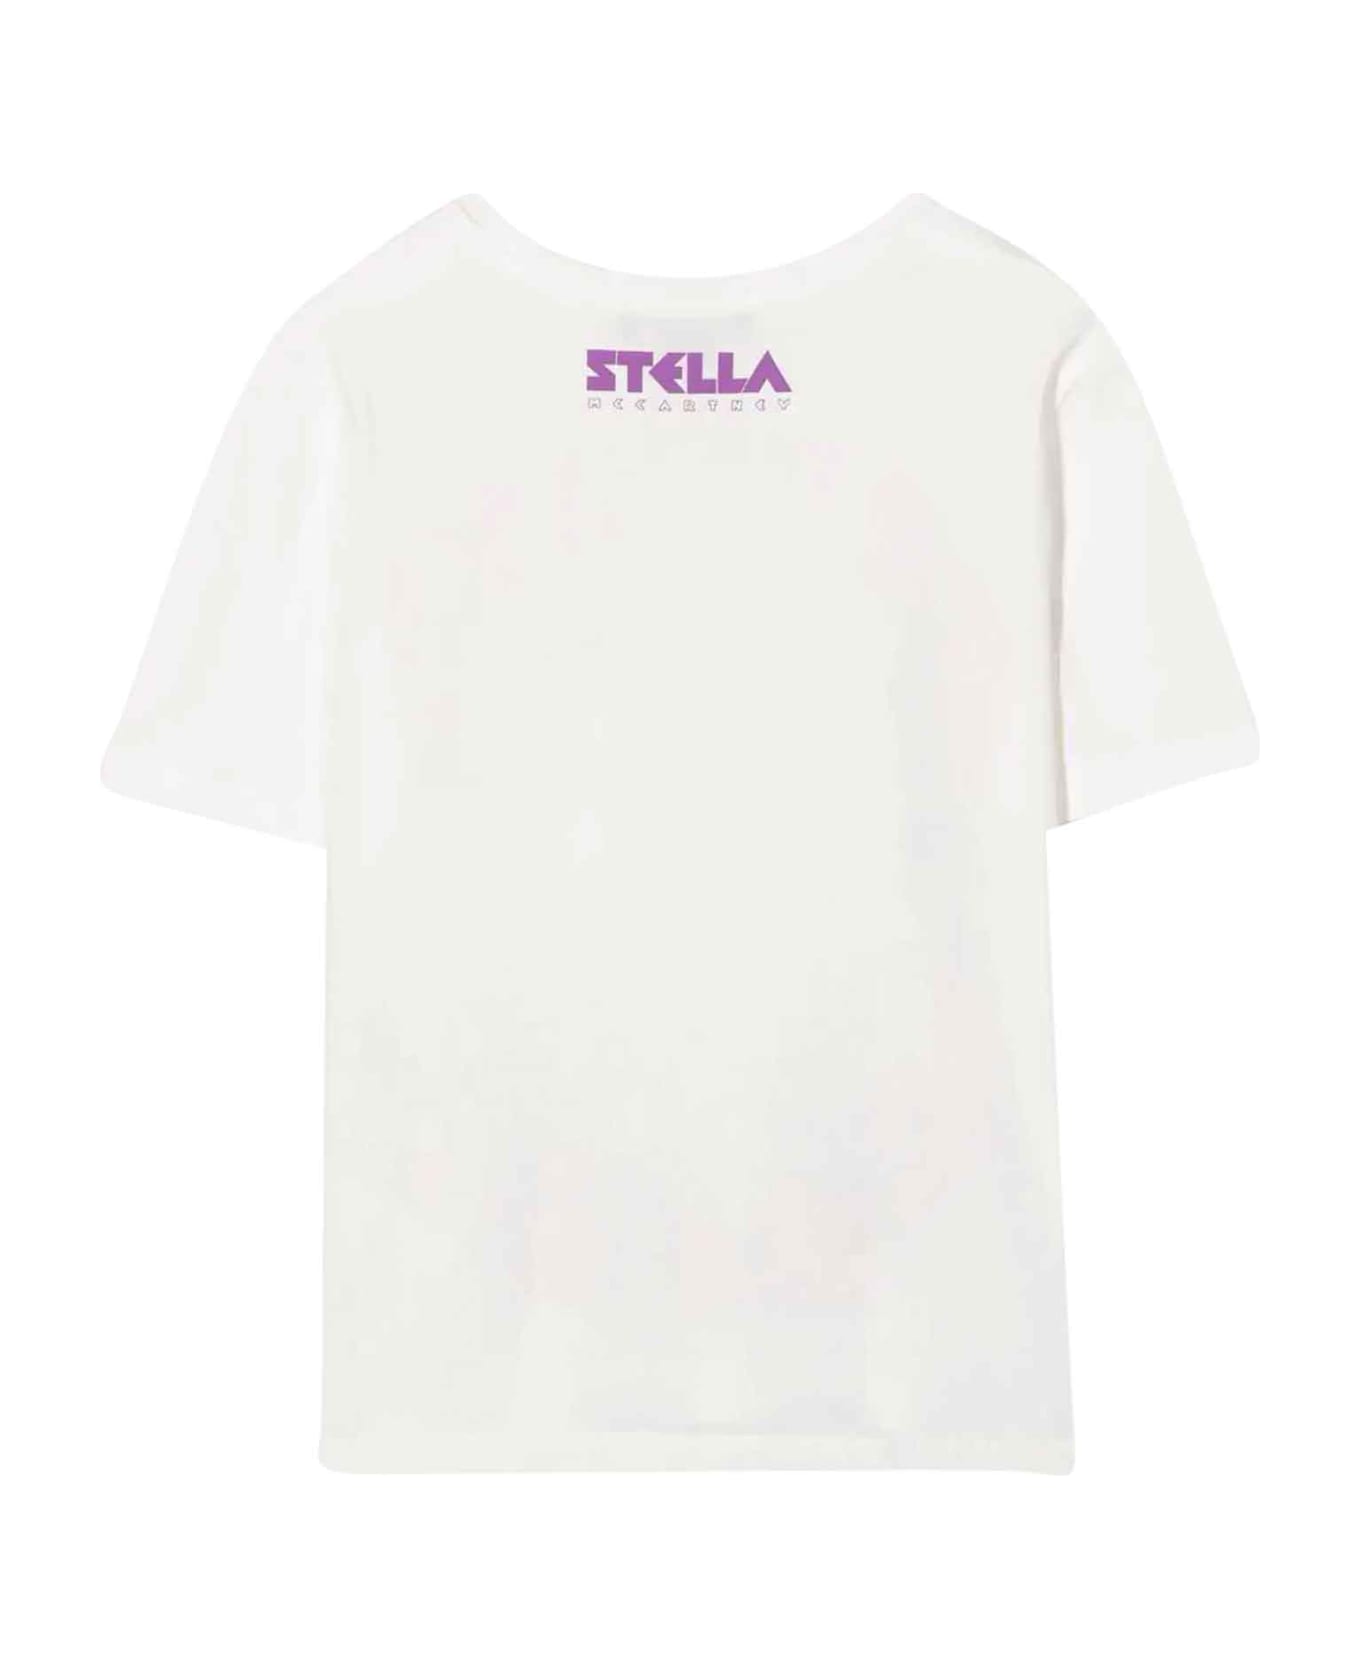 Stella McCartney Kids White T-shirt Girl - Bianco